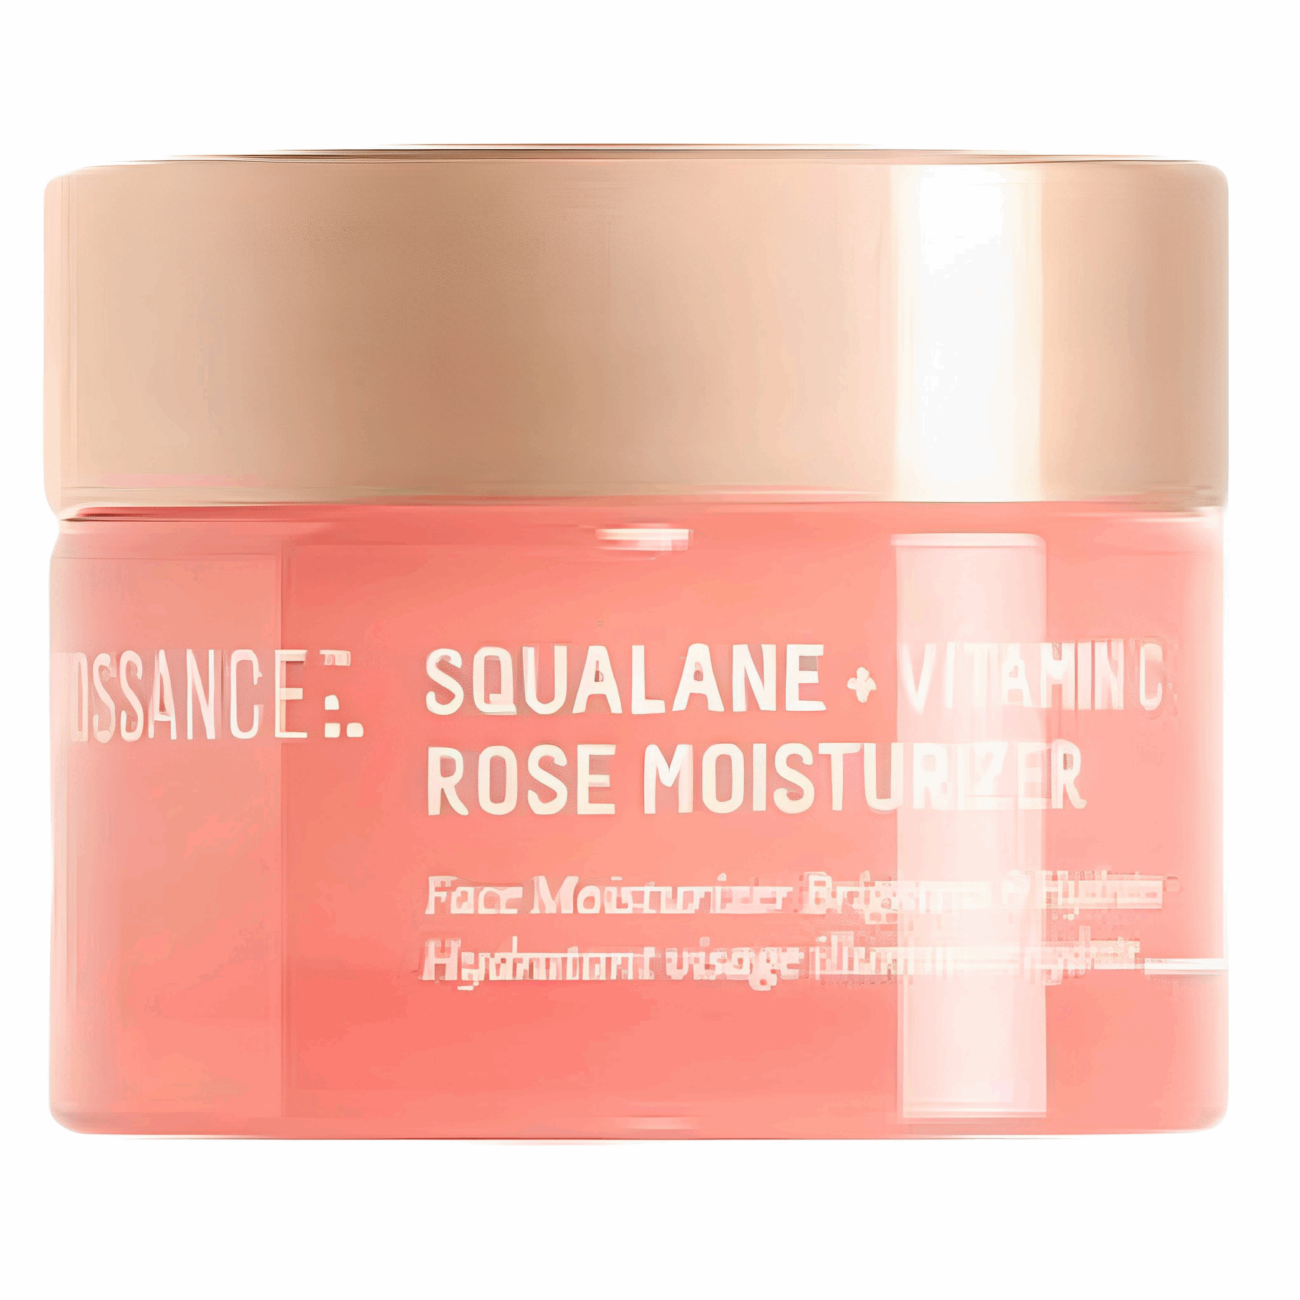 Squalane + Vitamin C Rose Moisturizer travel size-Biossance